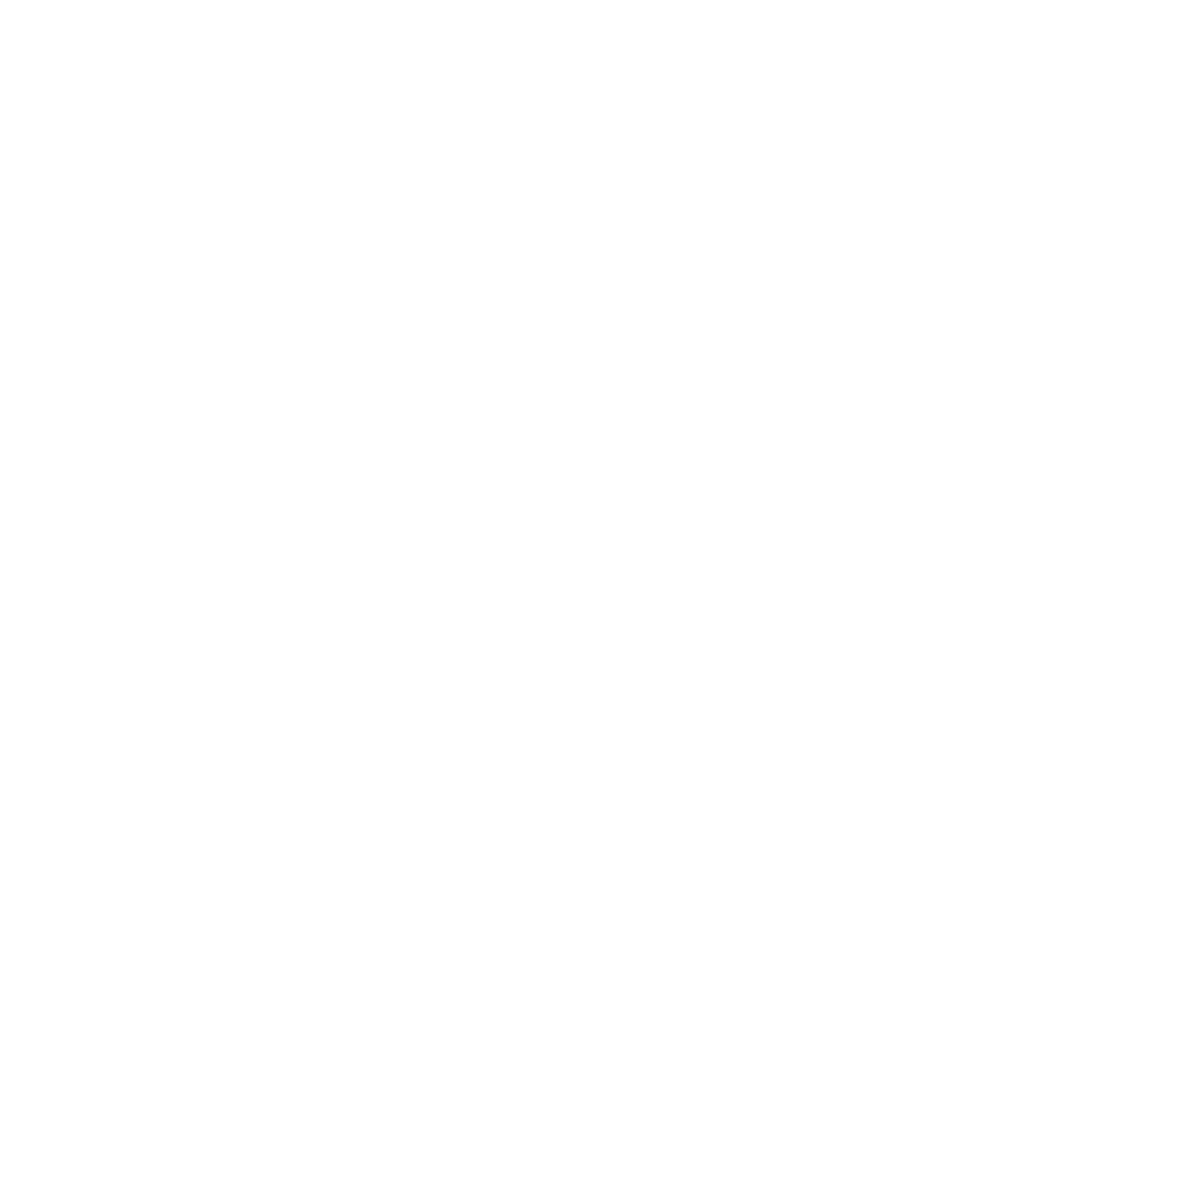 Egear - Consultoria - ISO 17025 - Belo Horizonte/MG